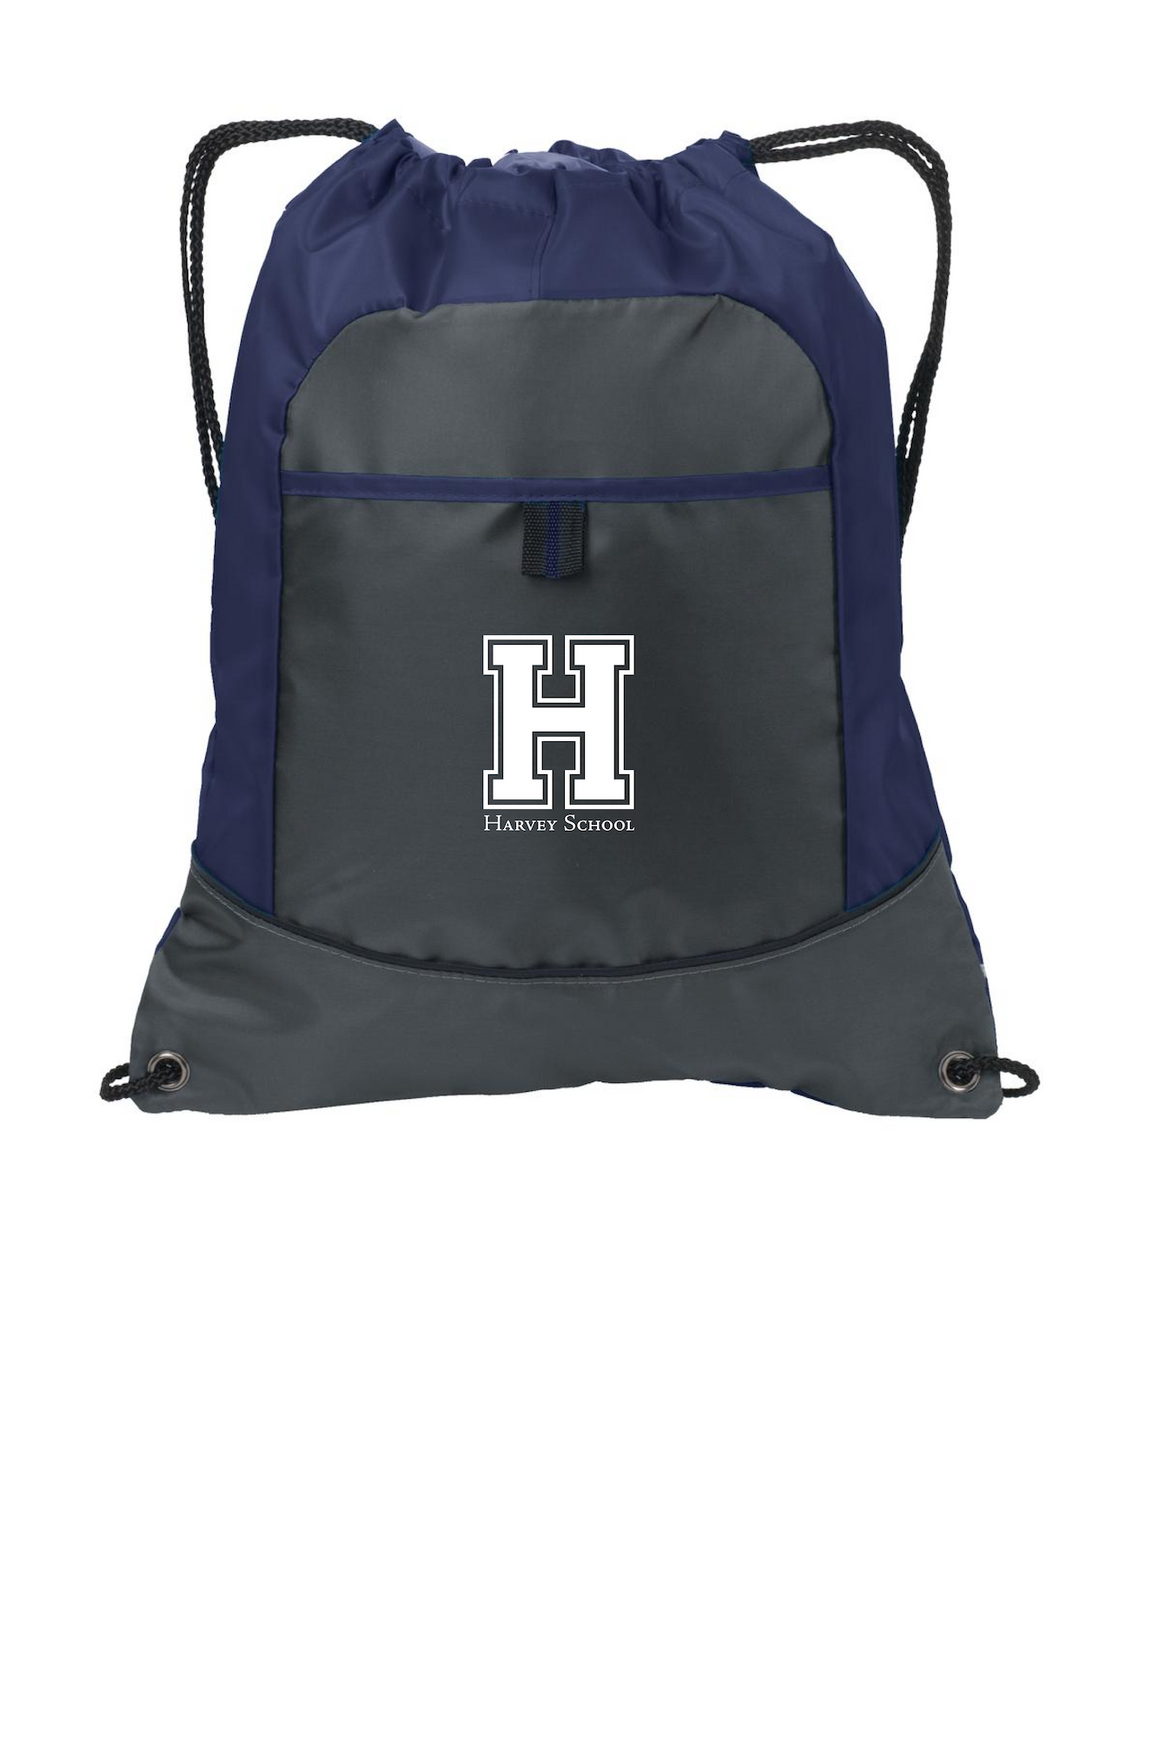 Harvey School Cinch Backpack